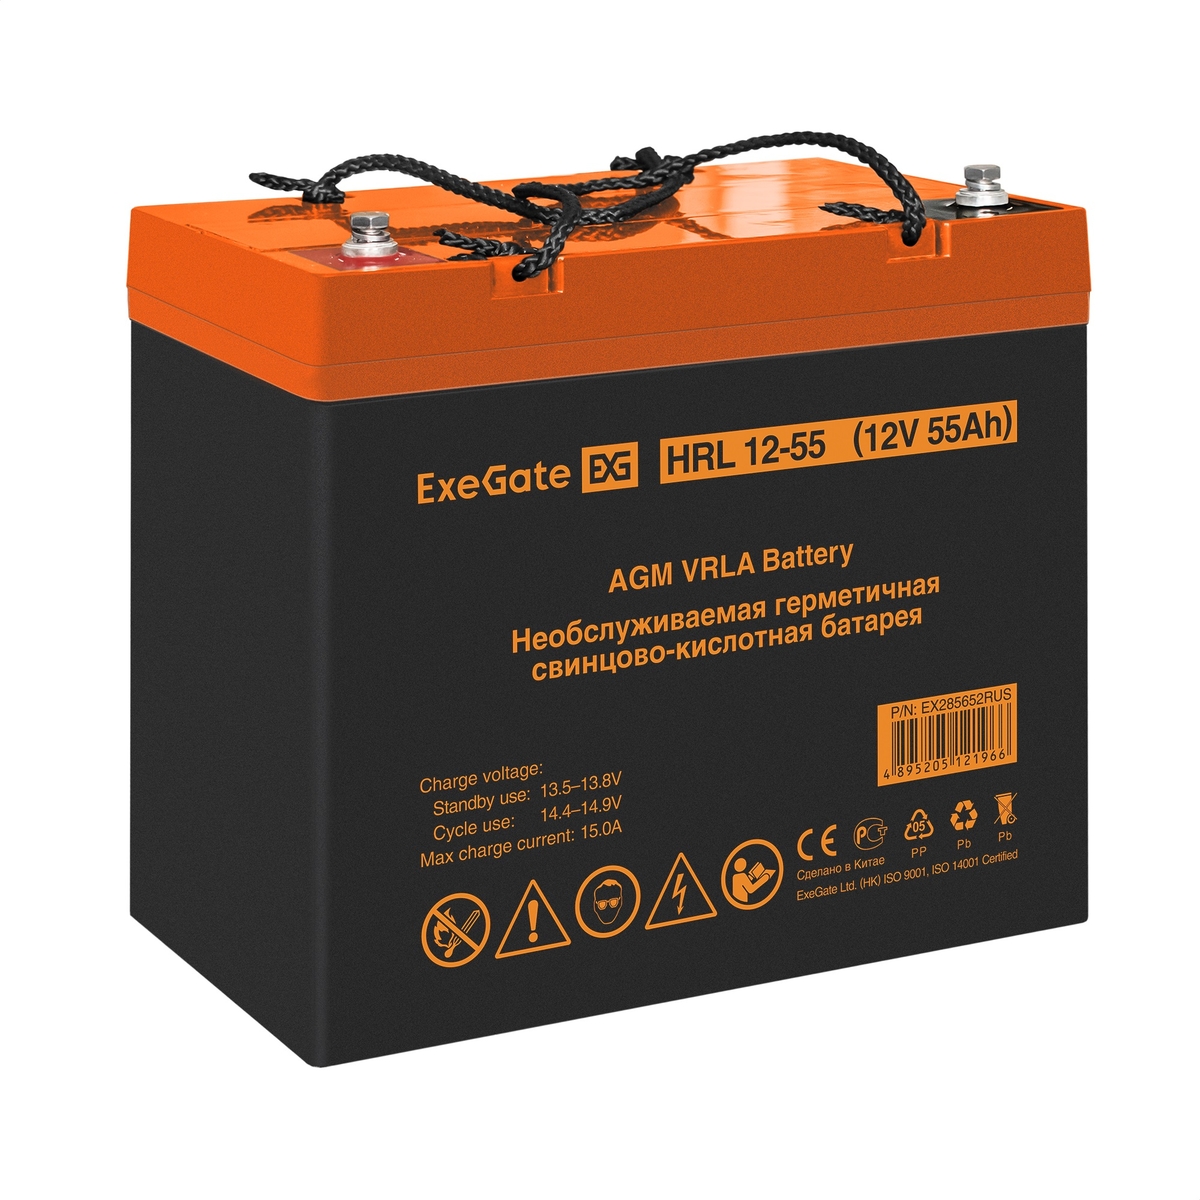 UPS set EX295996 + battery 55Ah EX285652 1 piece